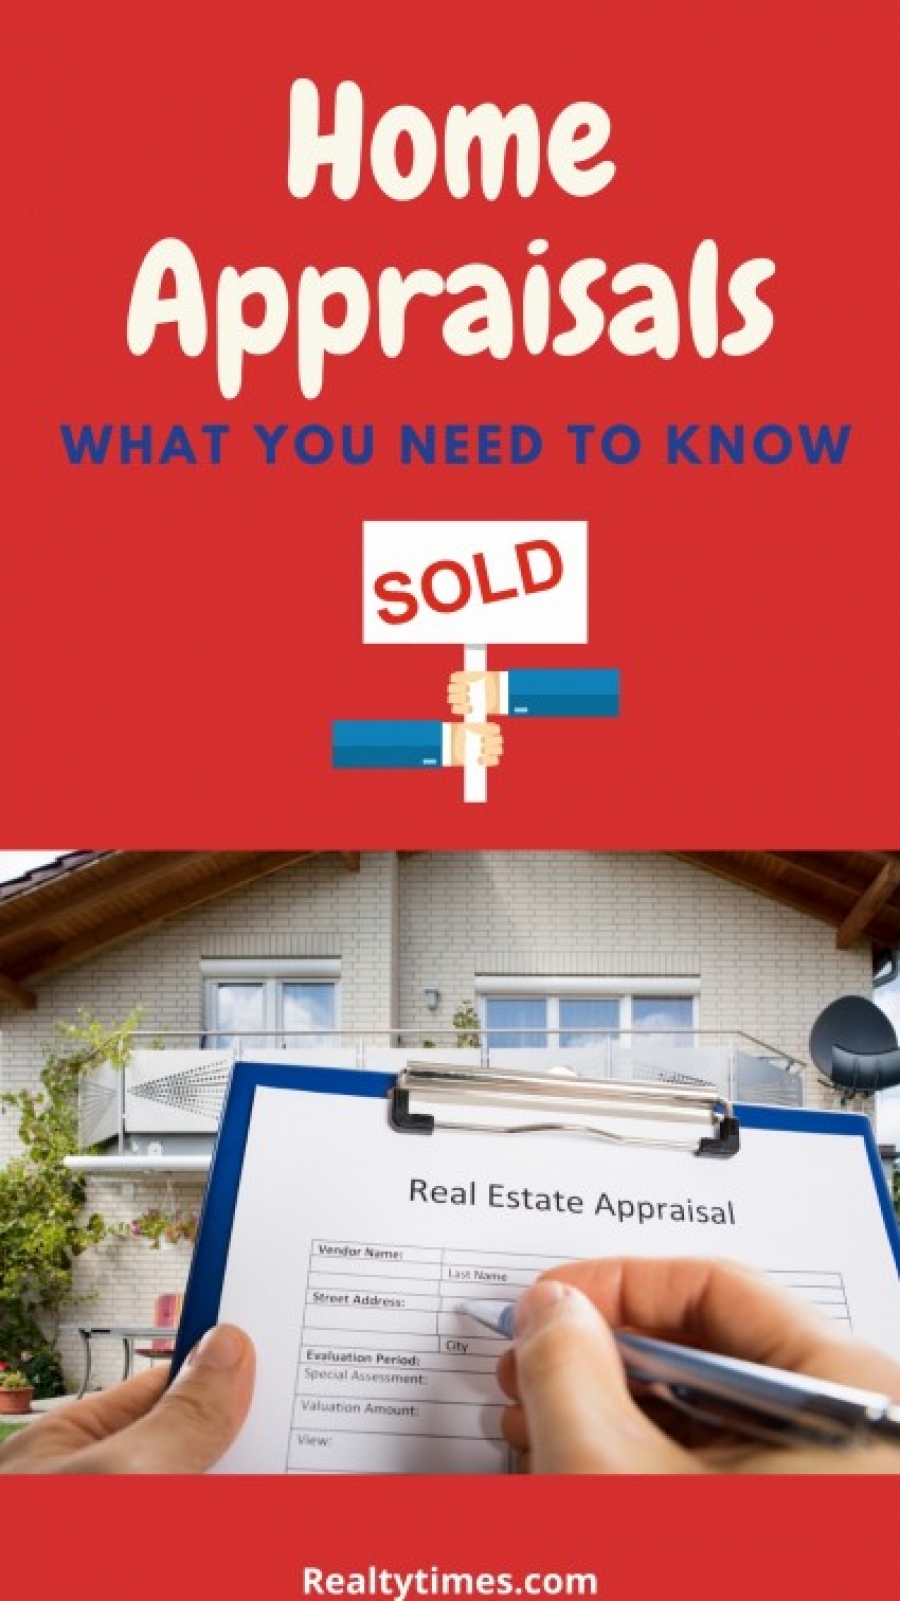 How Do Home Appraisals Work?